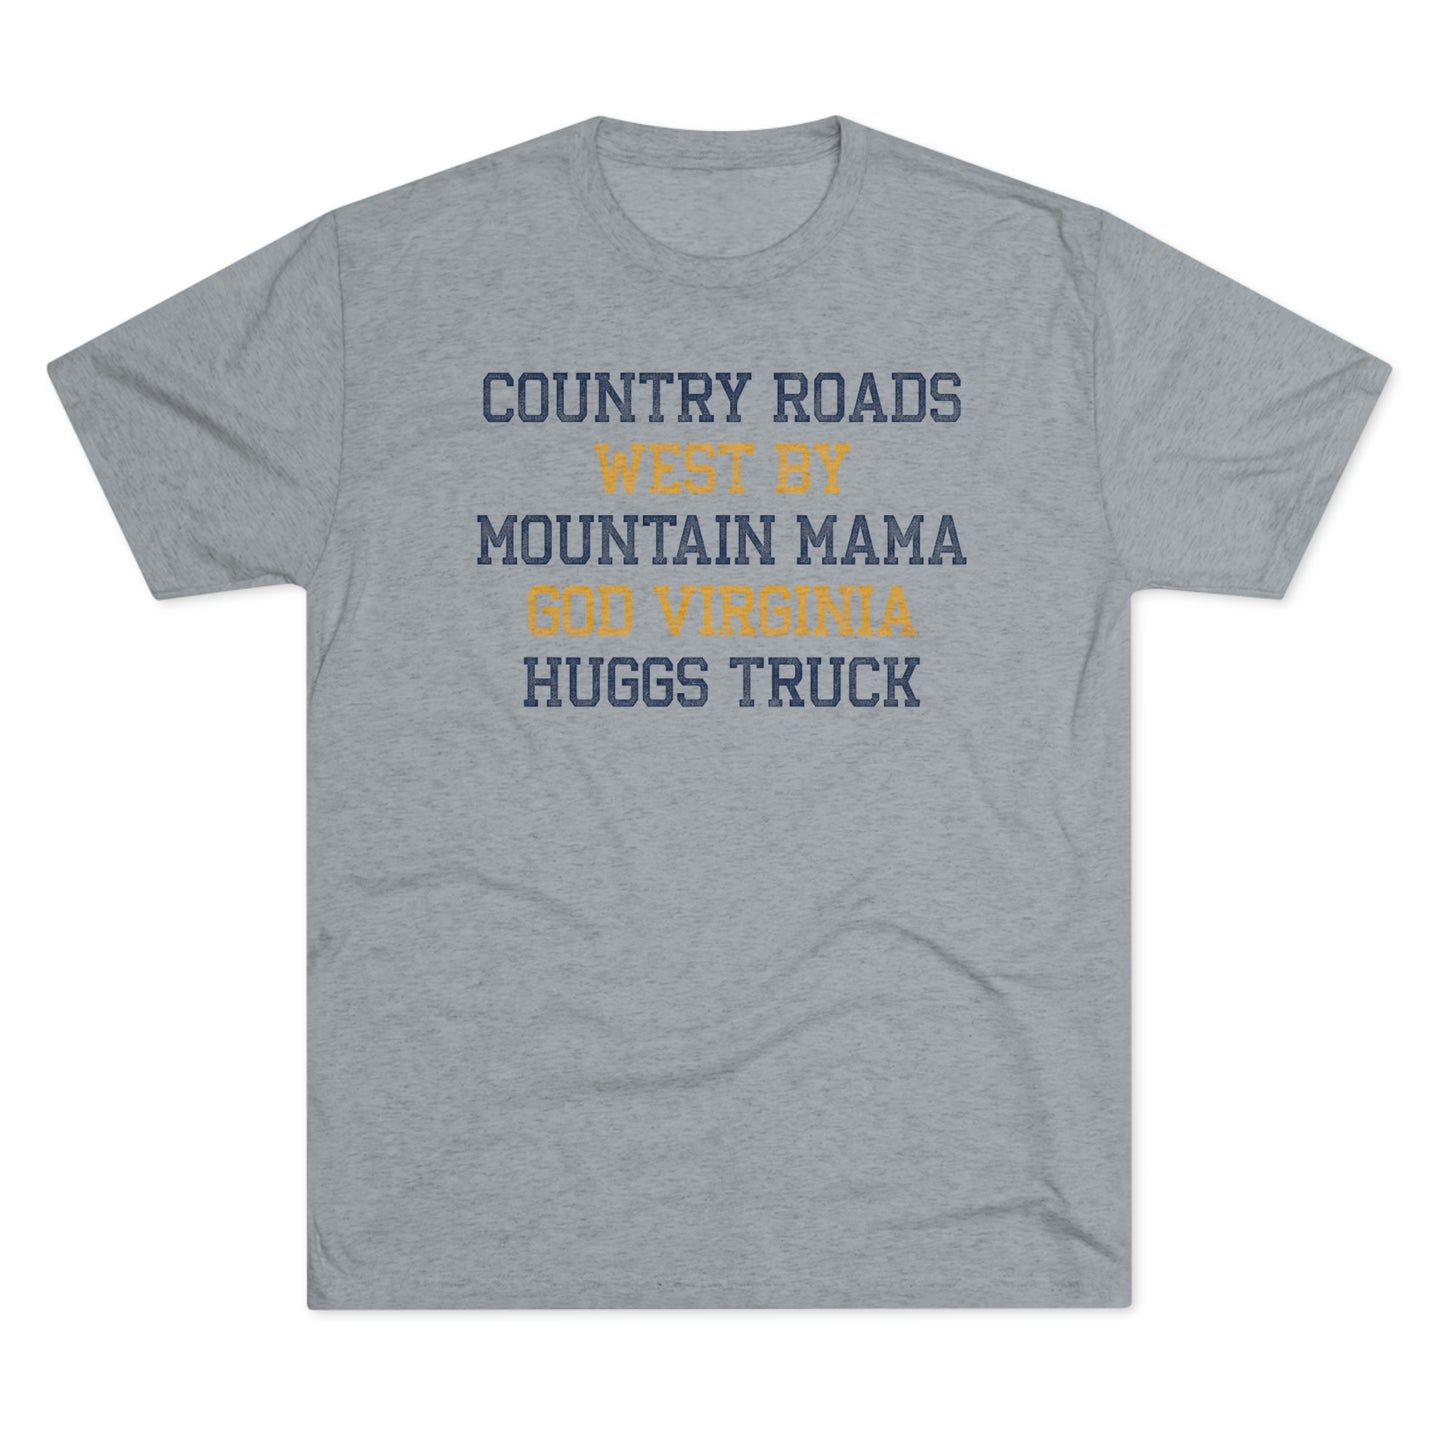 COUNTRY ROADS_MOUNTAIN MAMA_HUGGS TRUCK-Unisex Tri-Blend Crew Tee